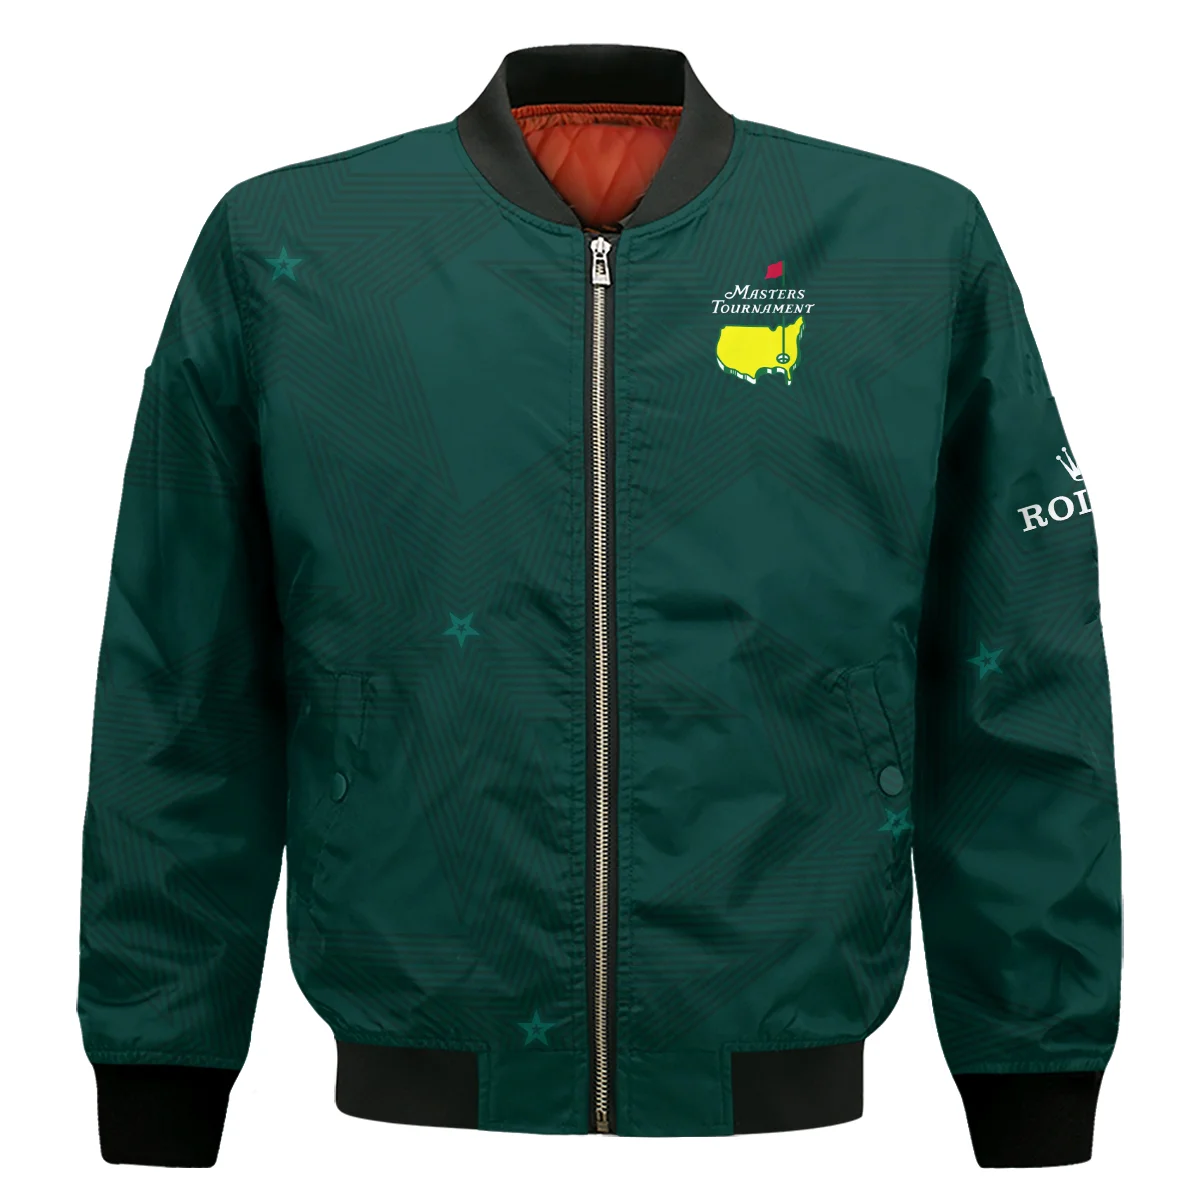 Stars Dark Green Golf Masters Tournament Rolex Sleeveless Jacket Style Classic Sleeveless Jacket